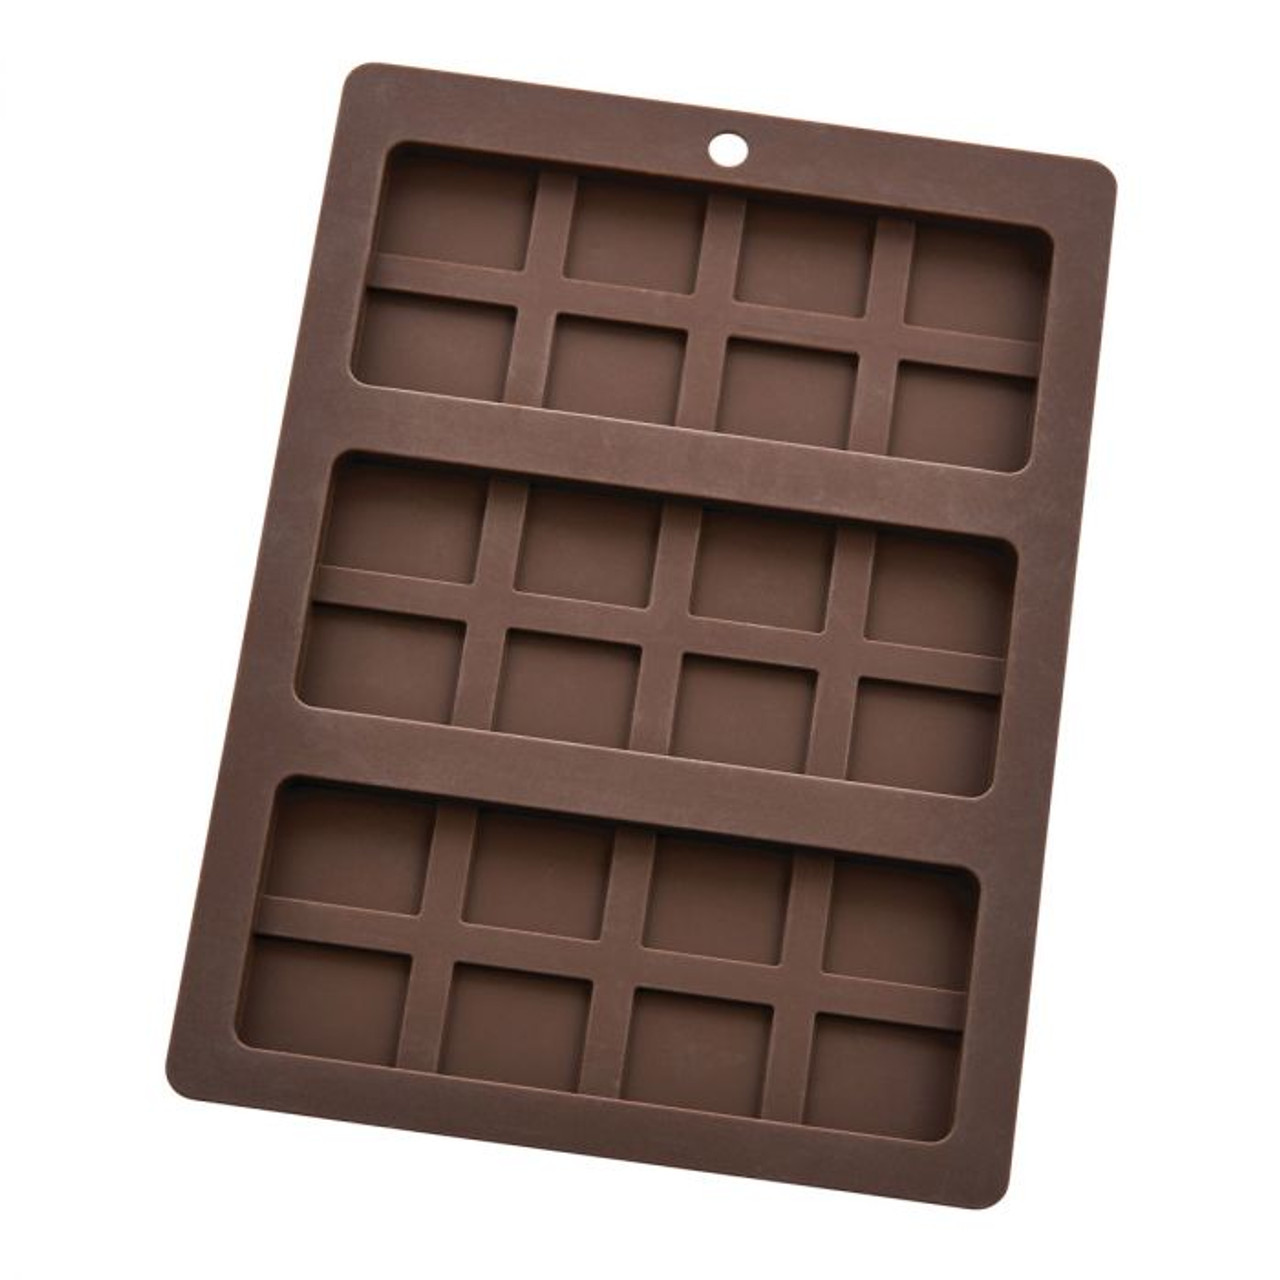 Shop Candy Bar Molds: Chocolate Bar Molds - Silicone Candy Bar